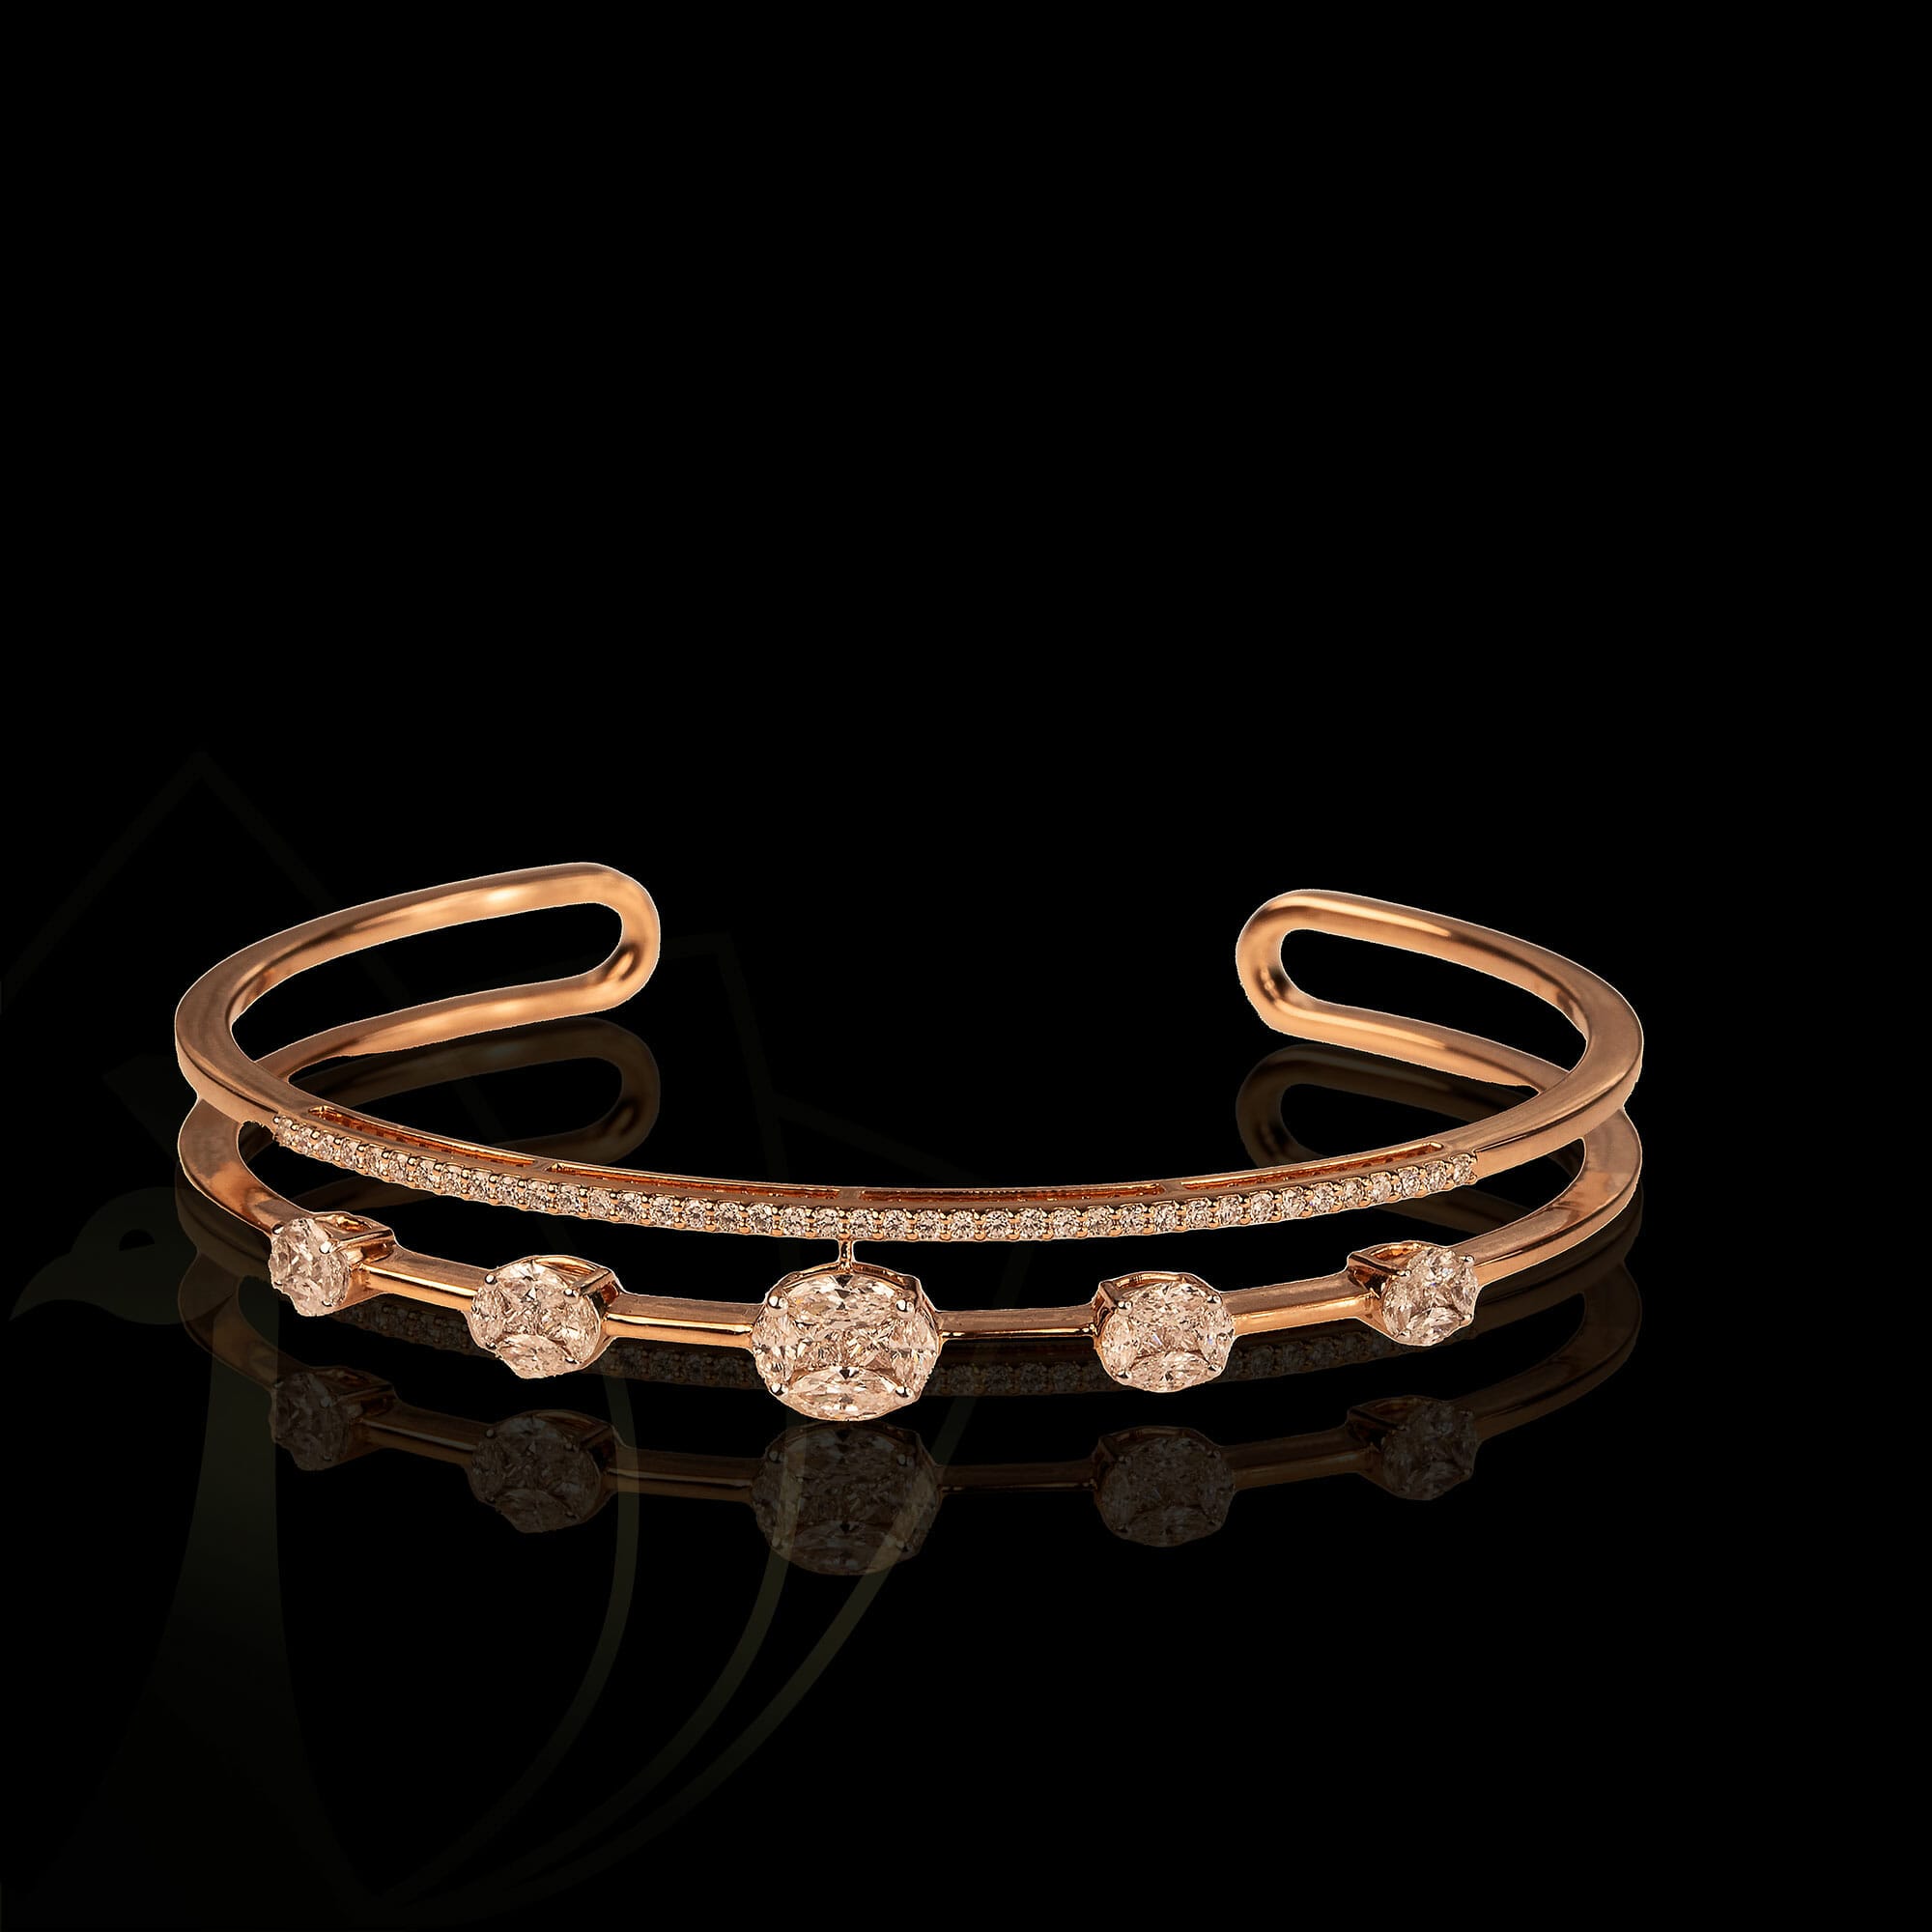 The imperial indulgence oval diamond bracelet.